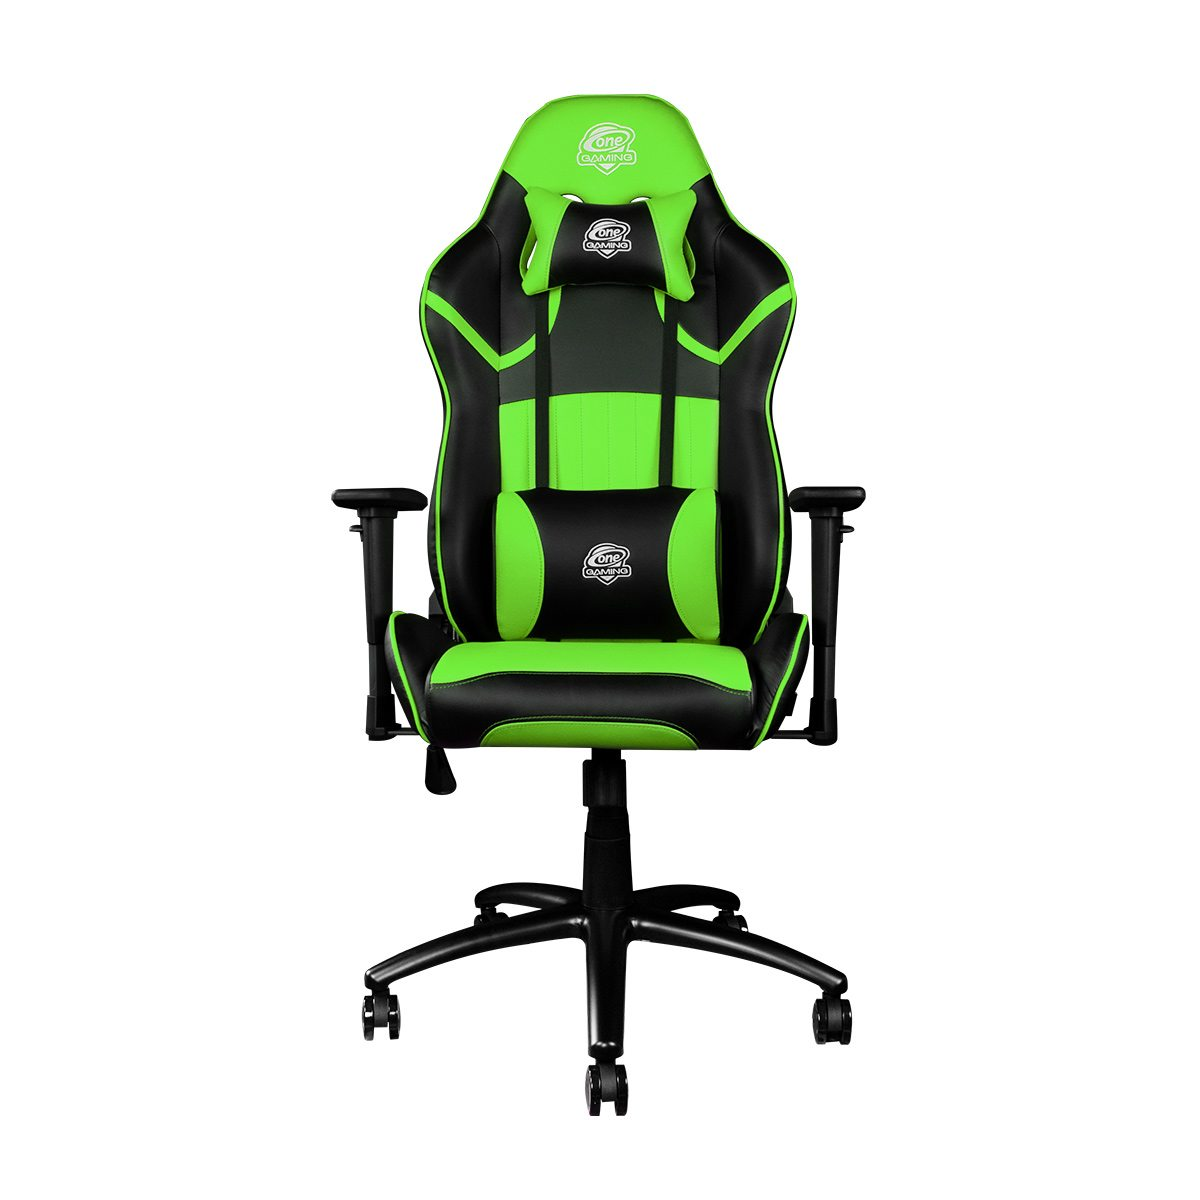 ONE GAMING Chair grün - Stuhl, Gaming Green schwarz Pro